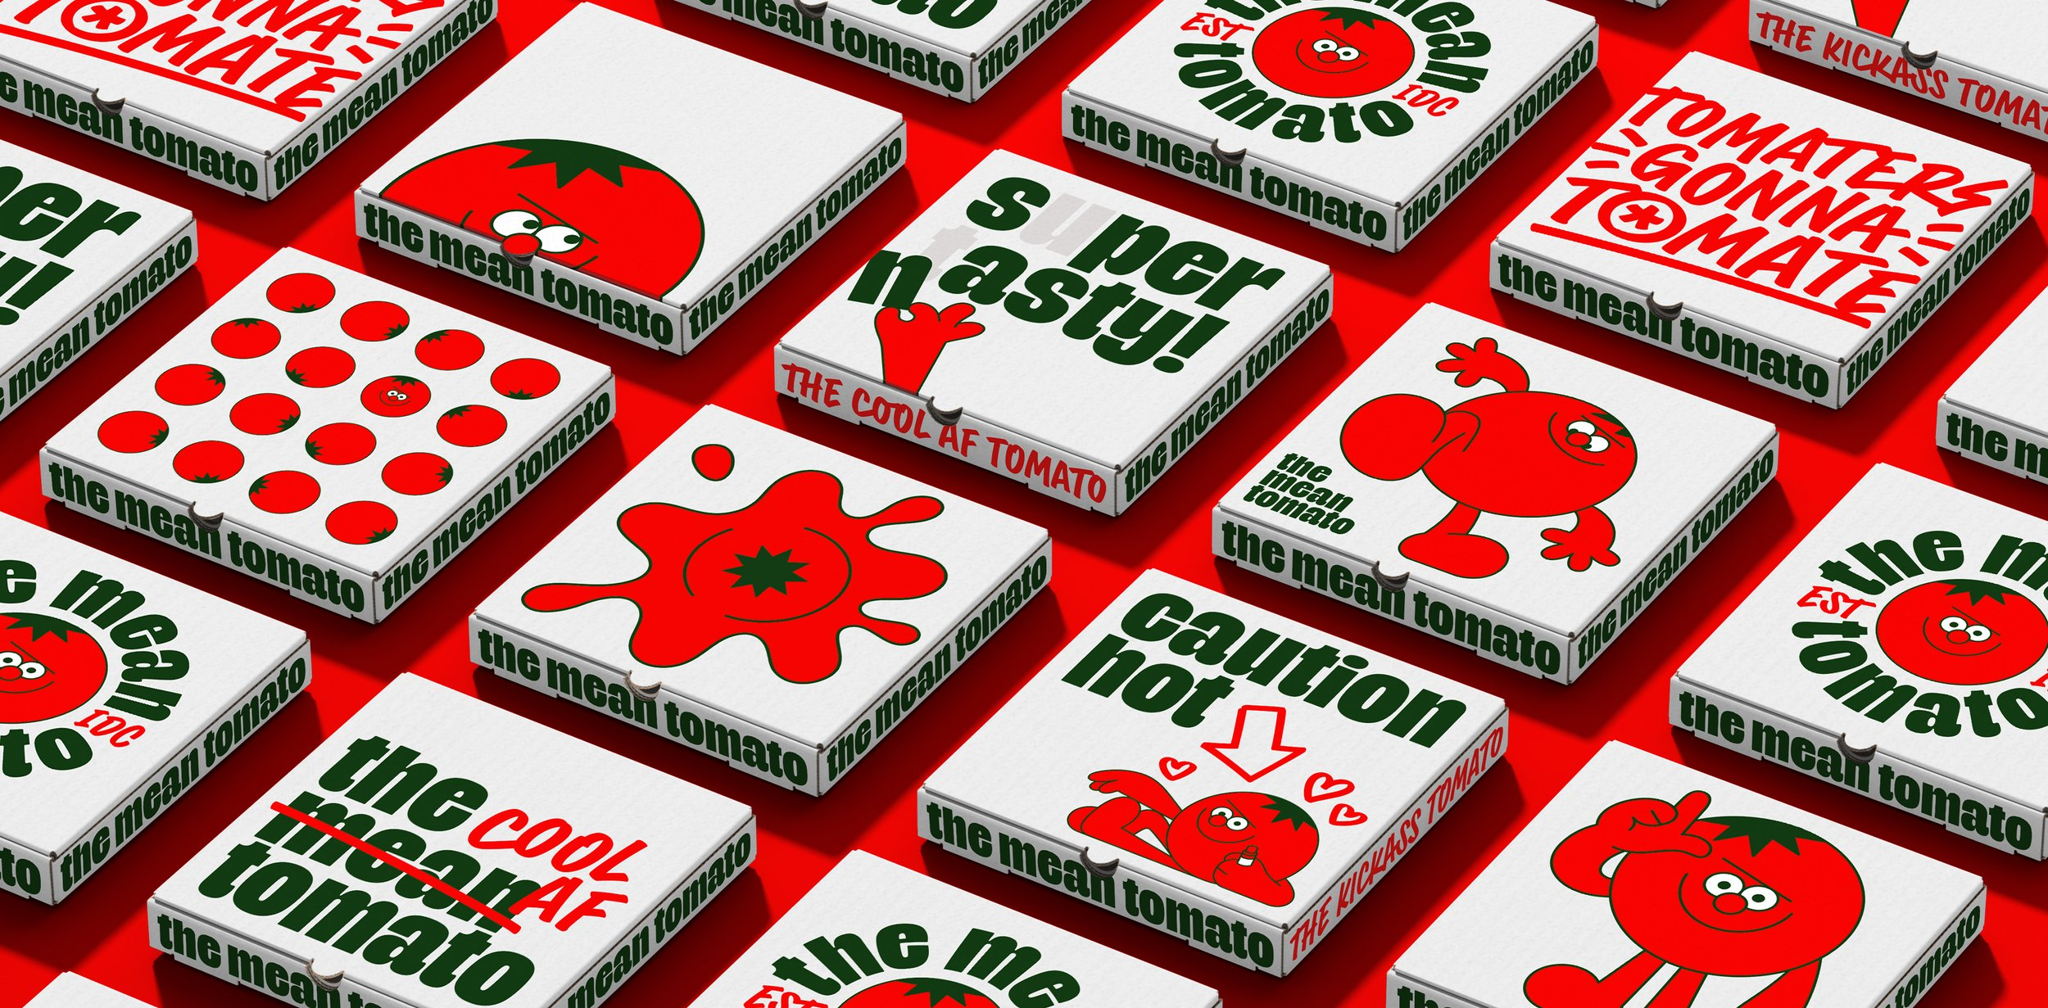 The Mean Tomato品牌食品包装设计(图5)